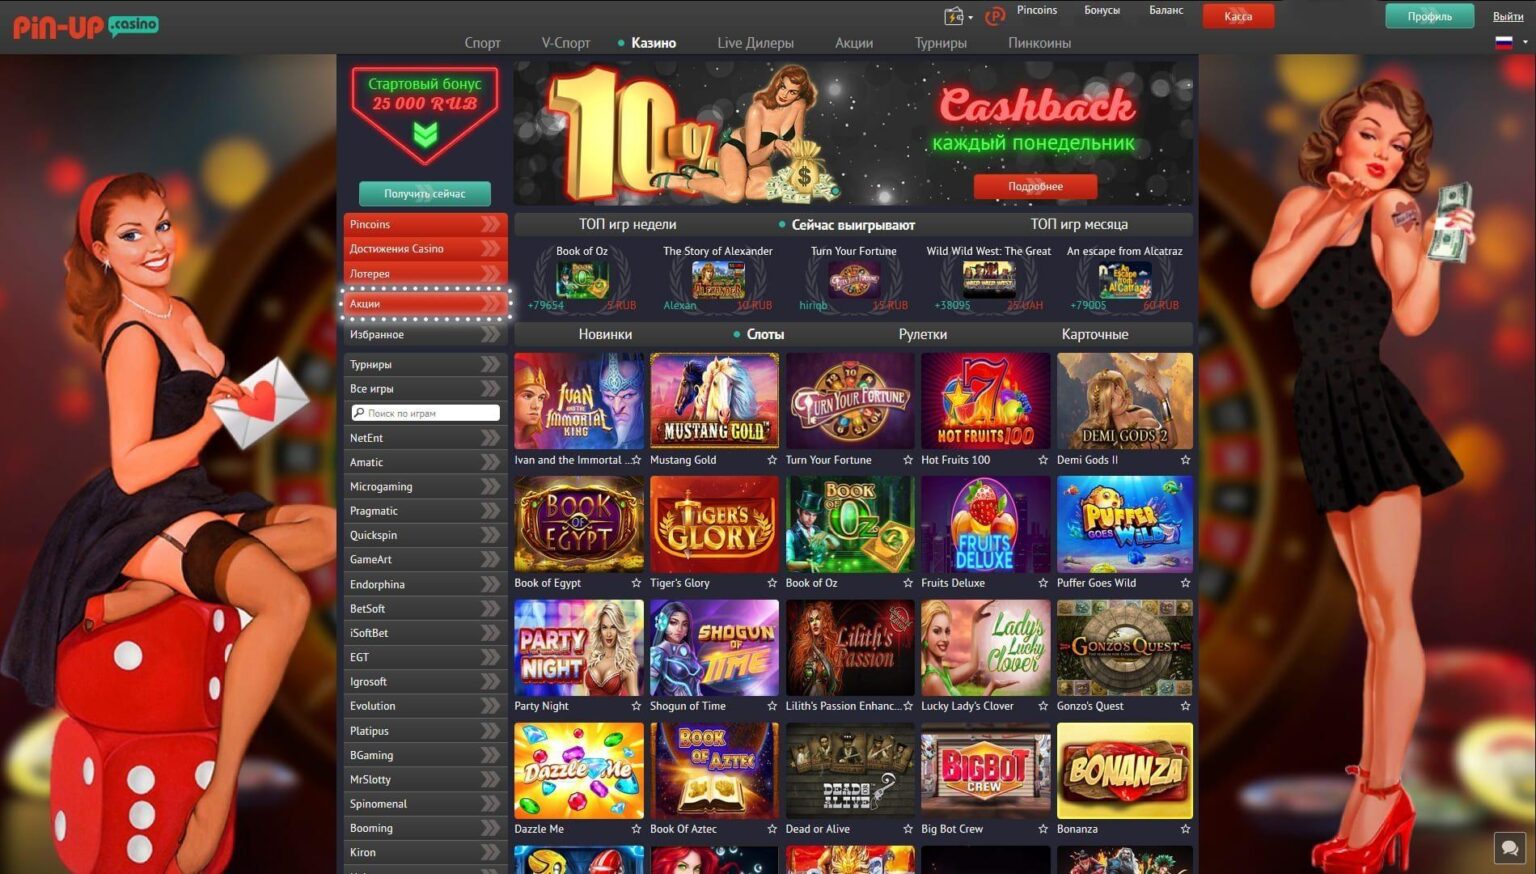 Casino pin up net вулкан игровые автоматы официальный сайт vulcan casino com